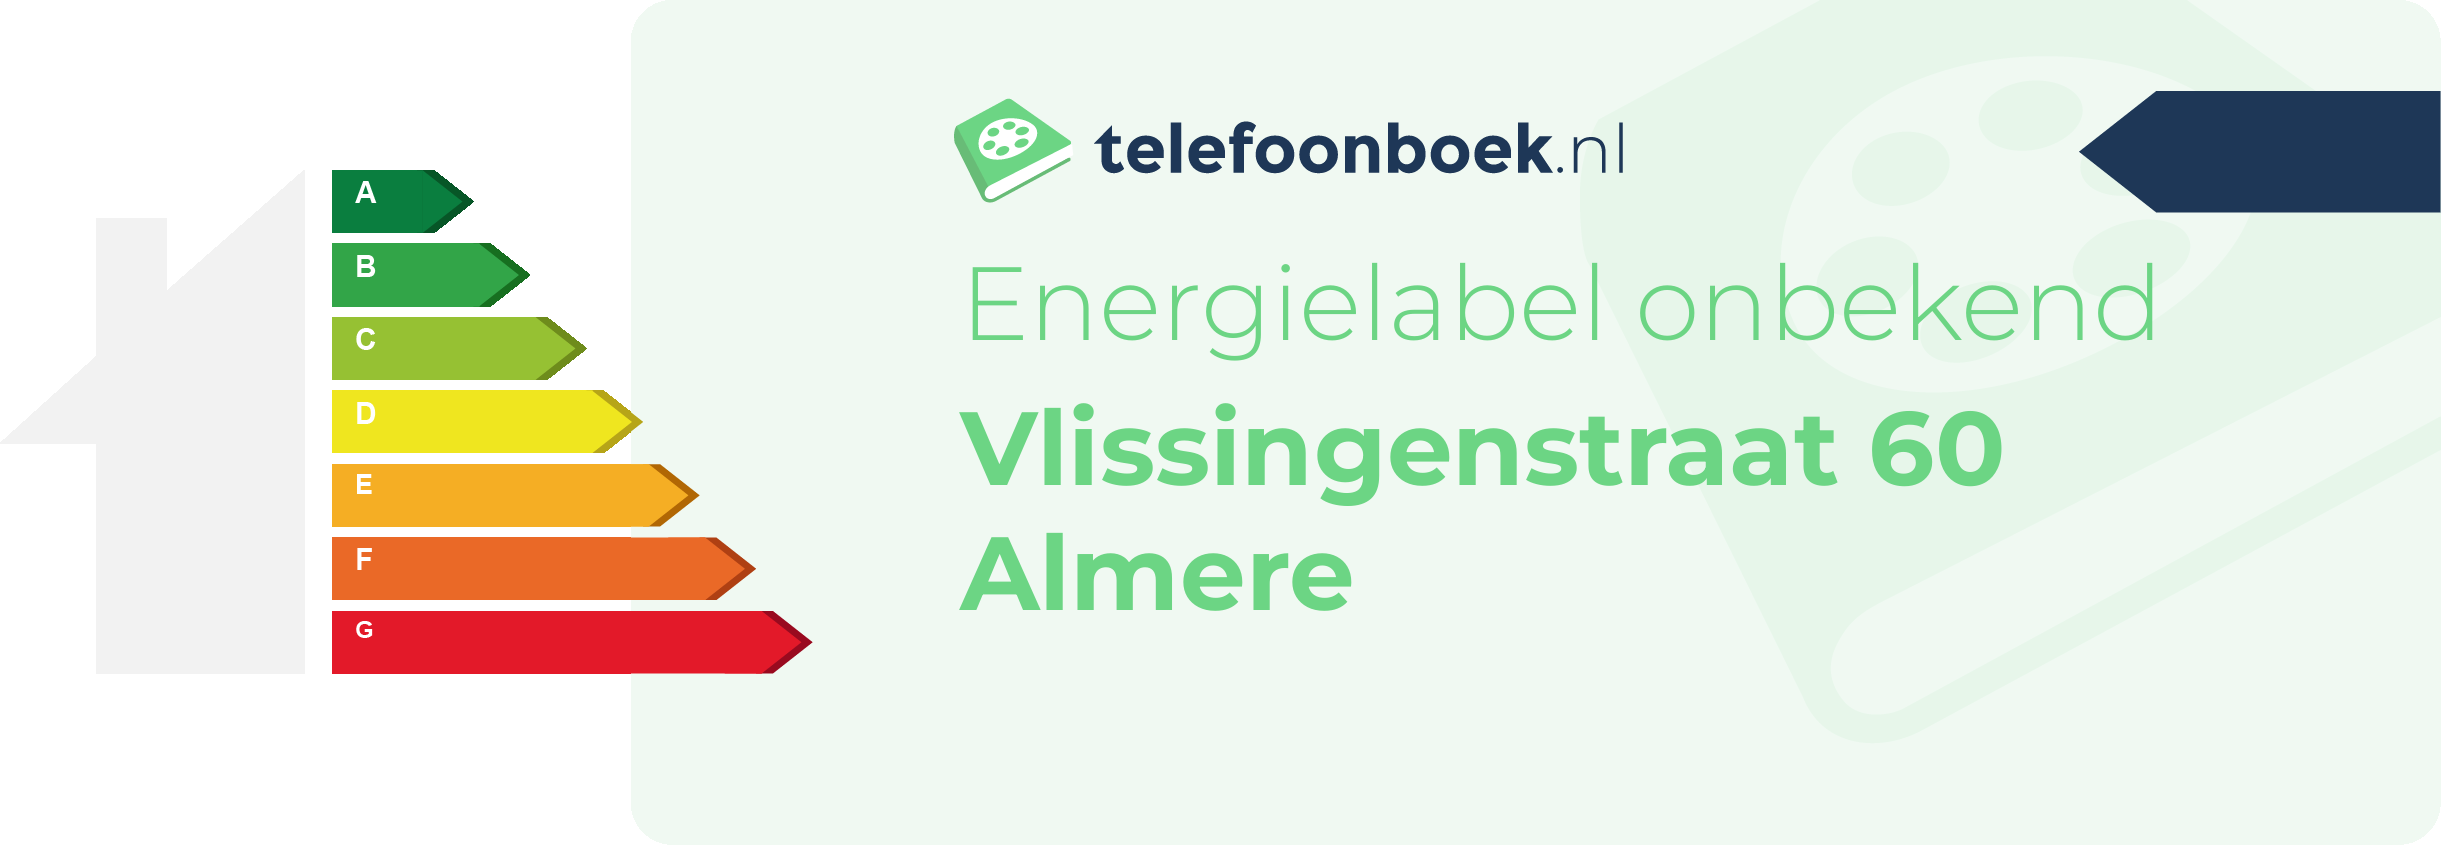 Energielabel Vlissingenstraat 60 Almere